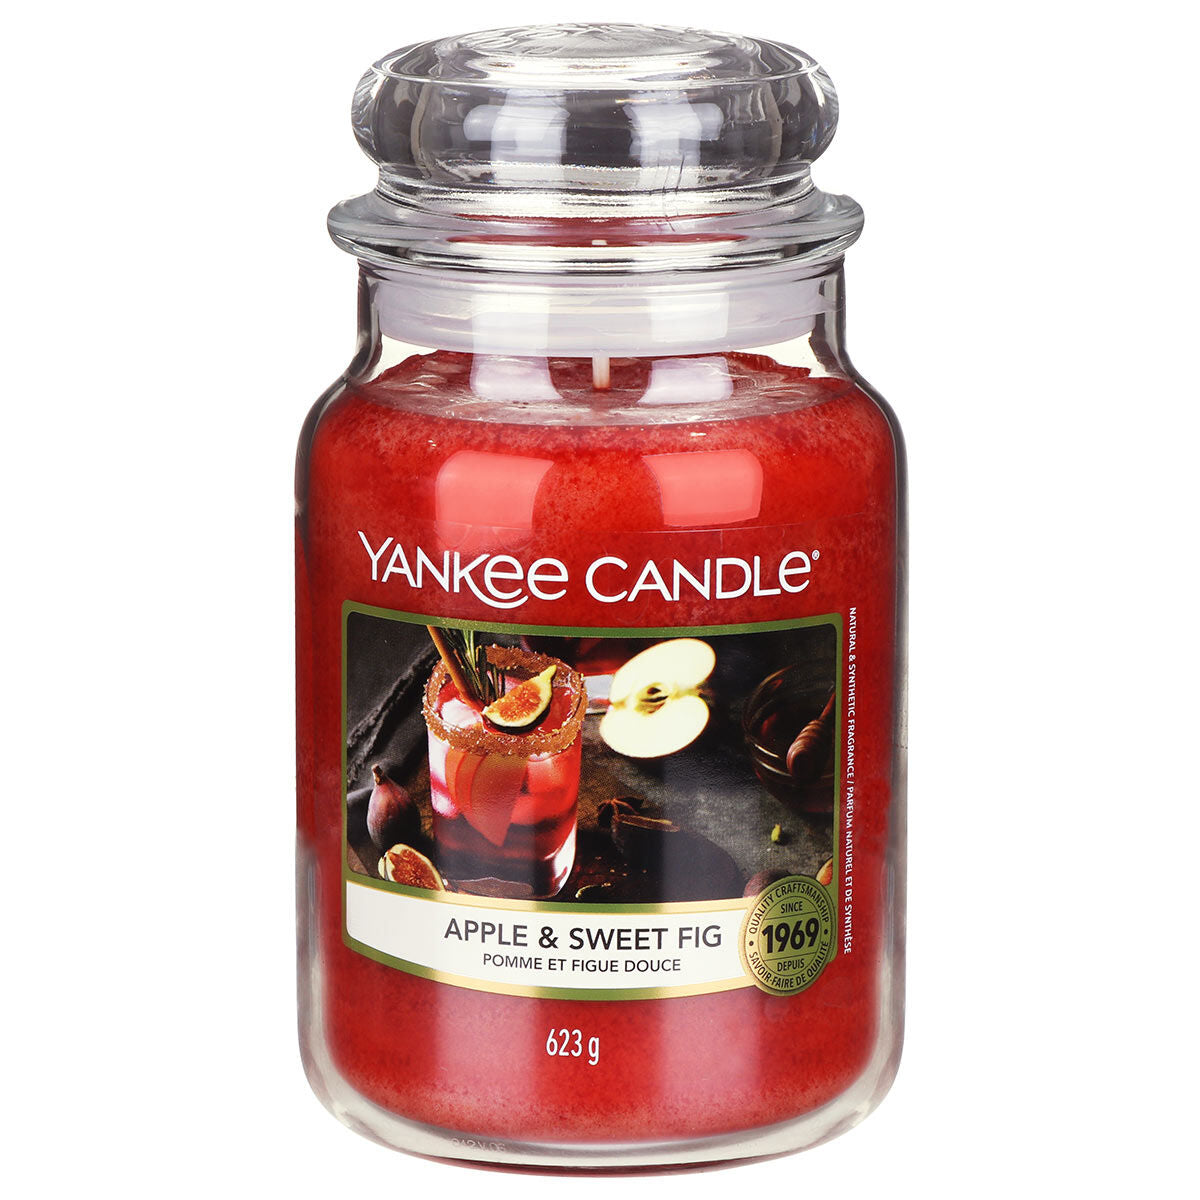 Yankee Candle Apple & Sweet Fig Large Jar Candle